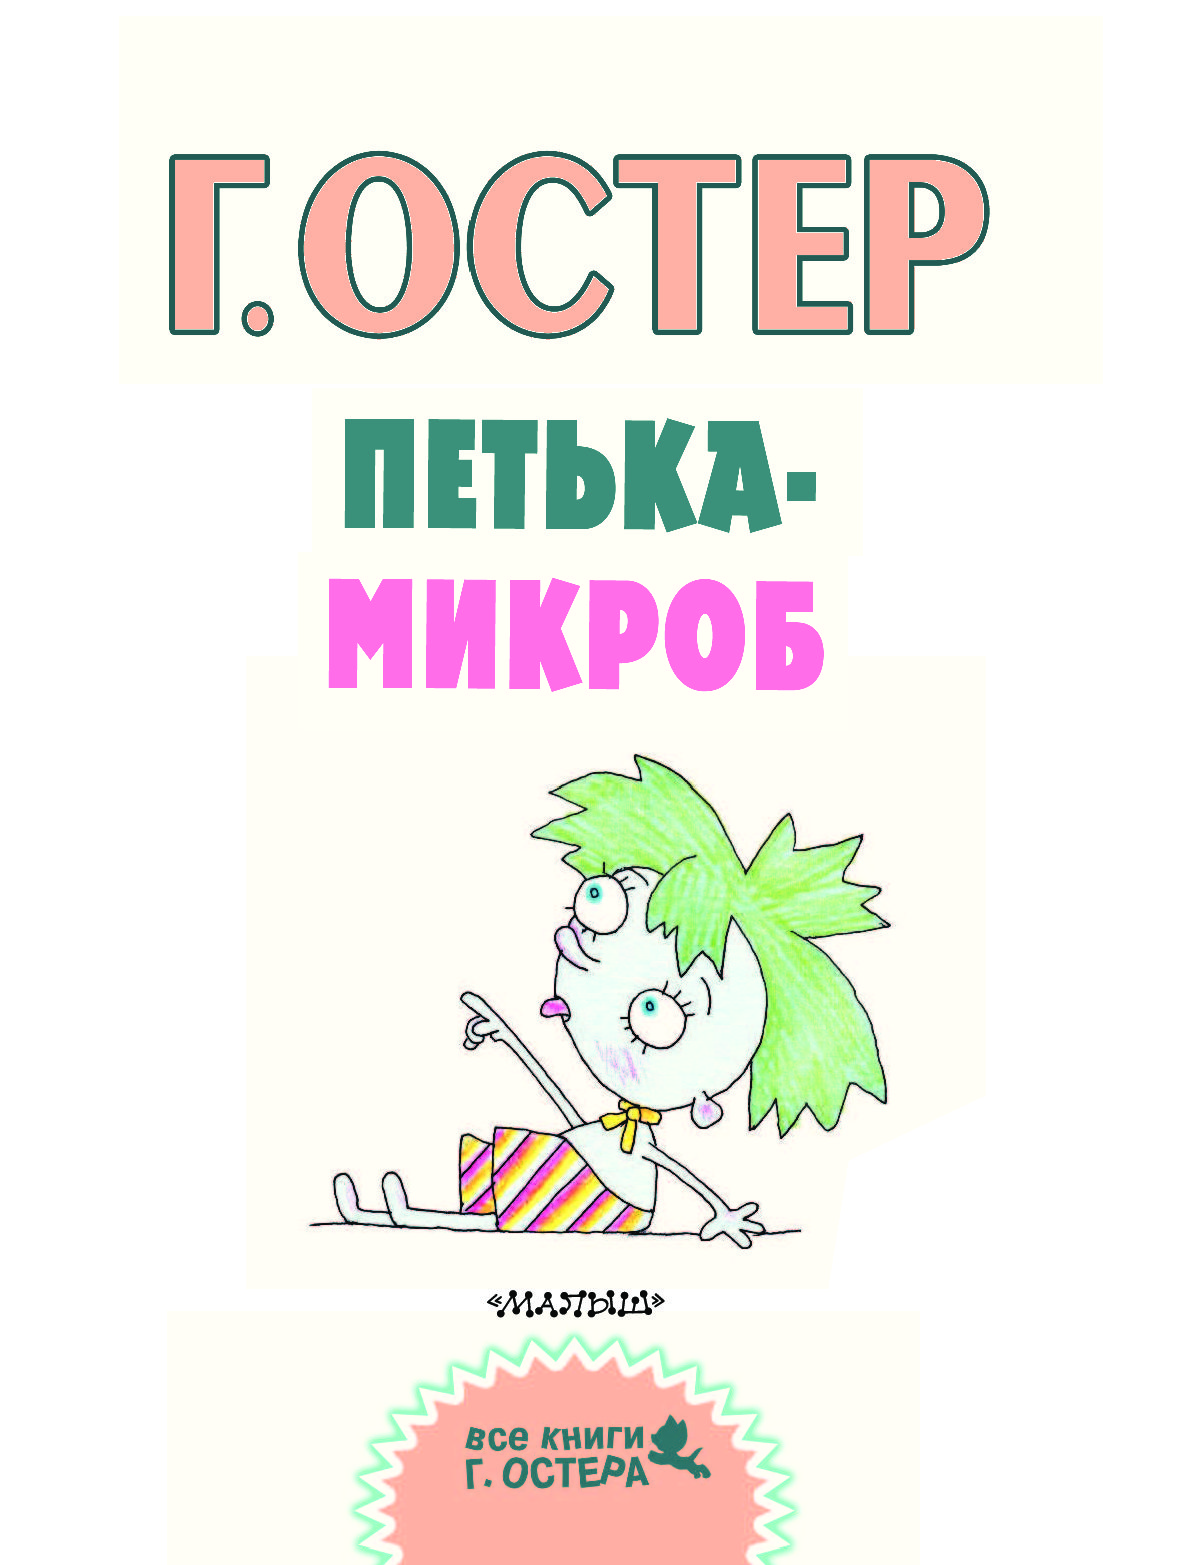 Петька-микроб - kids-pages.ru